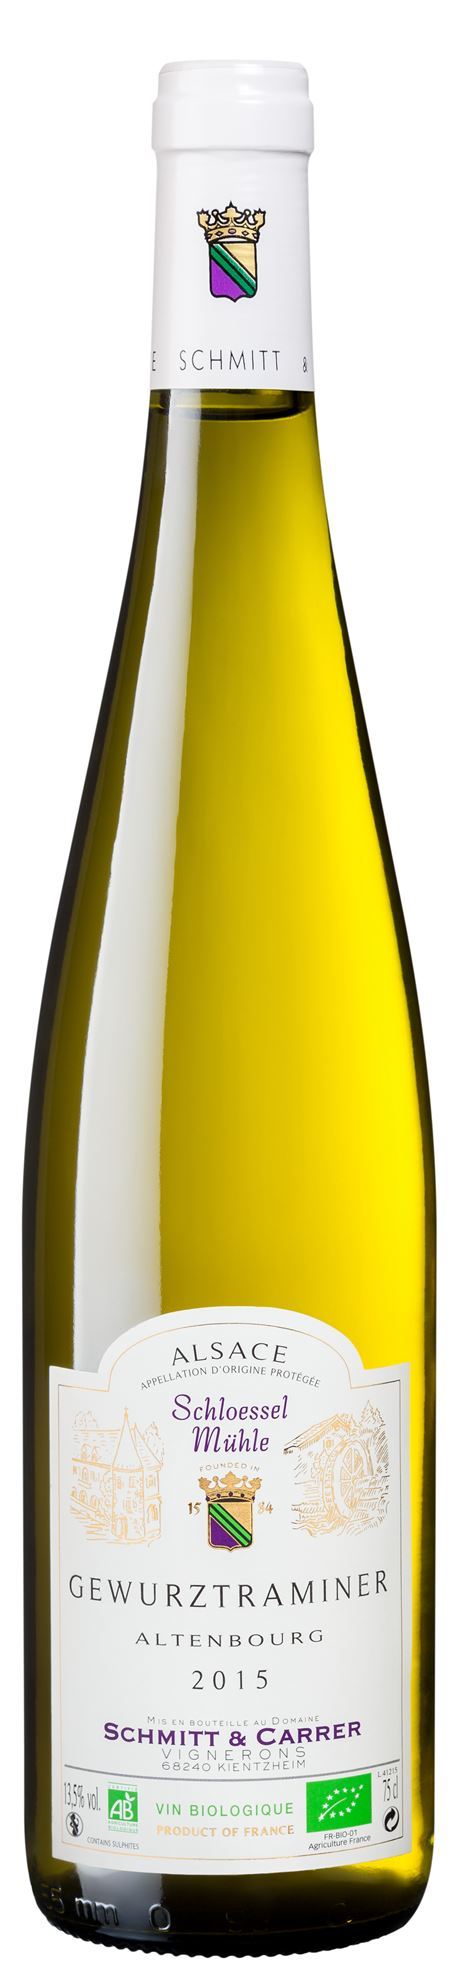 Schmitt & Carrer GEWURZTRAMINER "Altenbourg" Premier Vin d'Alsace 2015 BIO